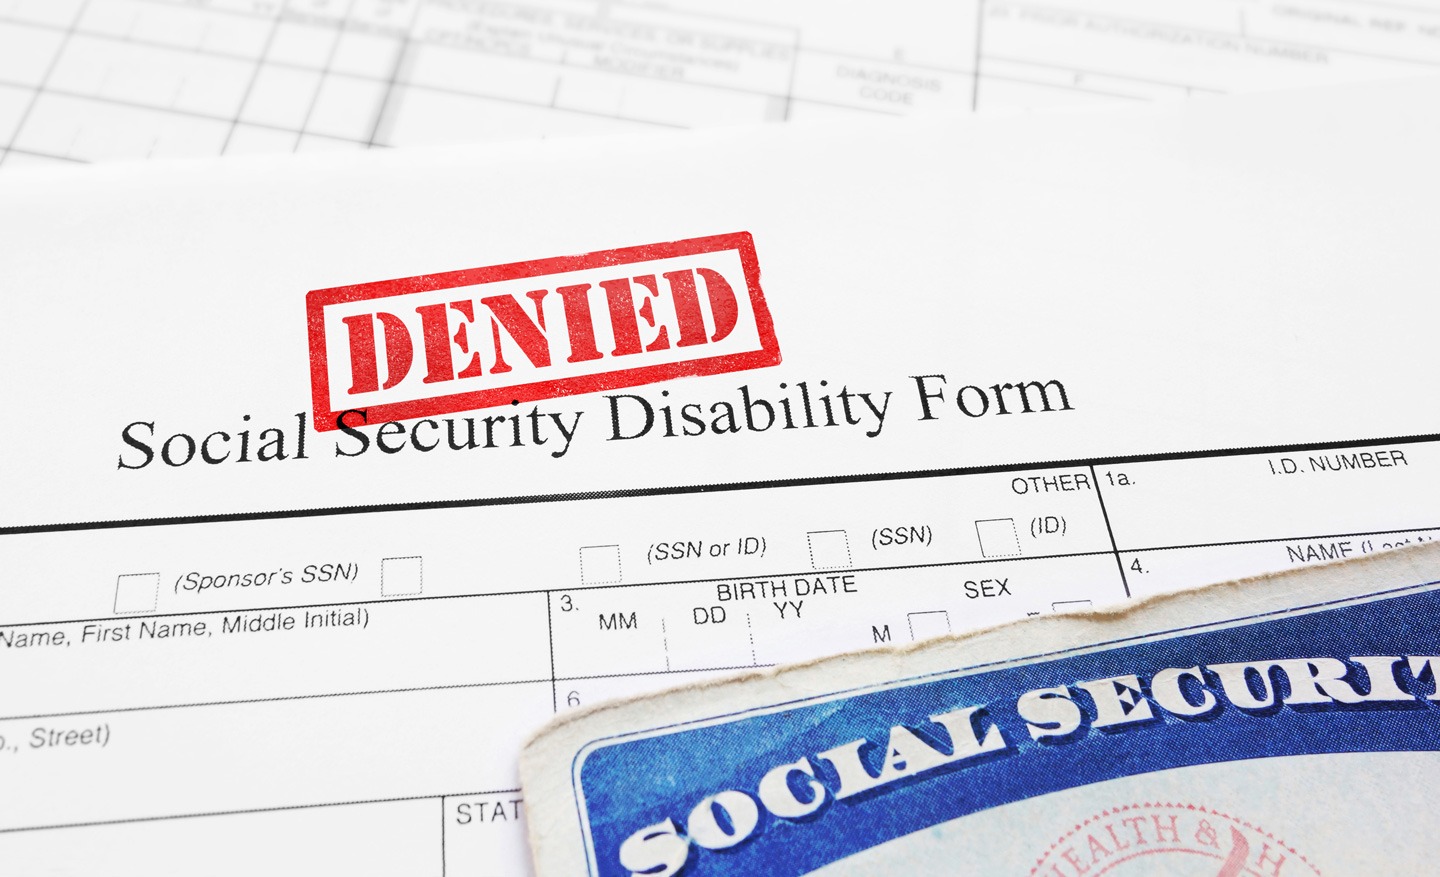 Denied Social Security Disability Form.